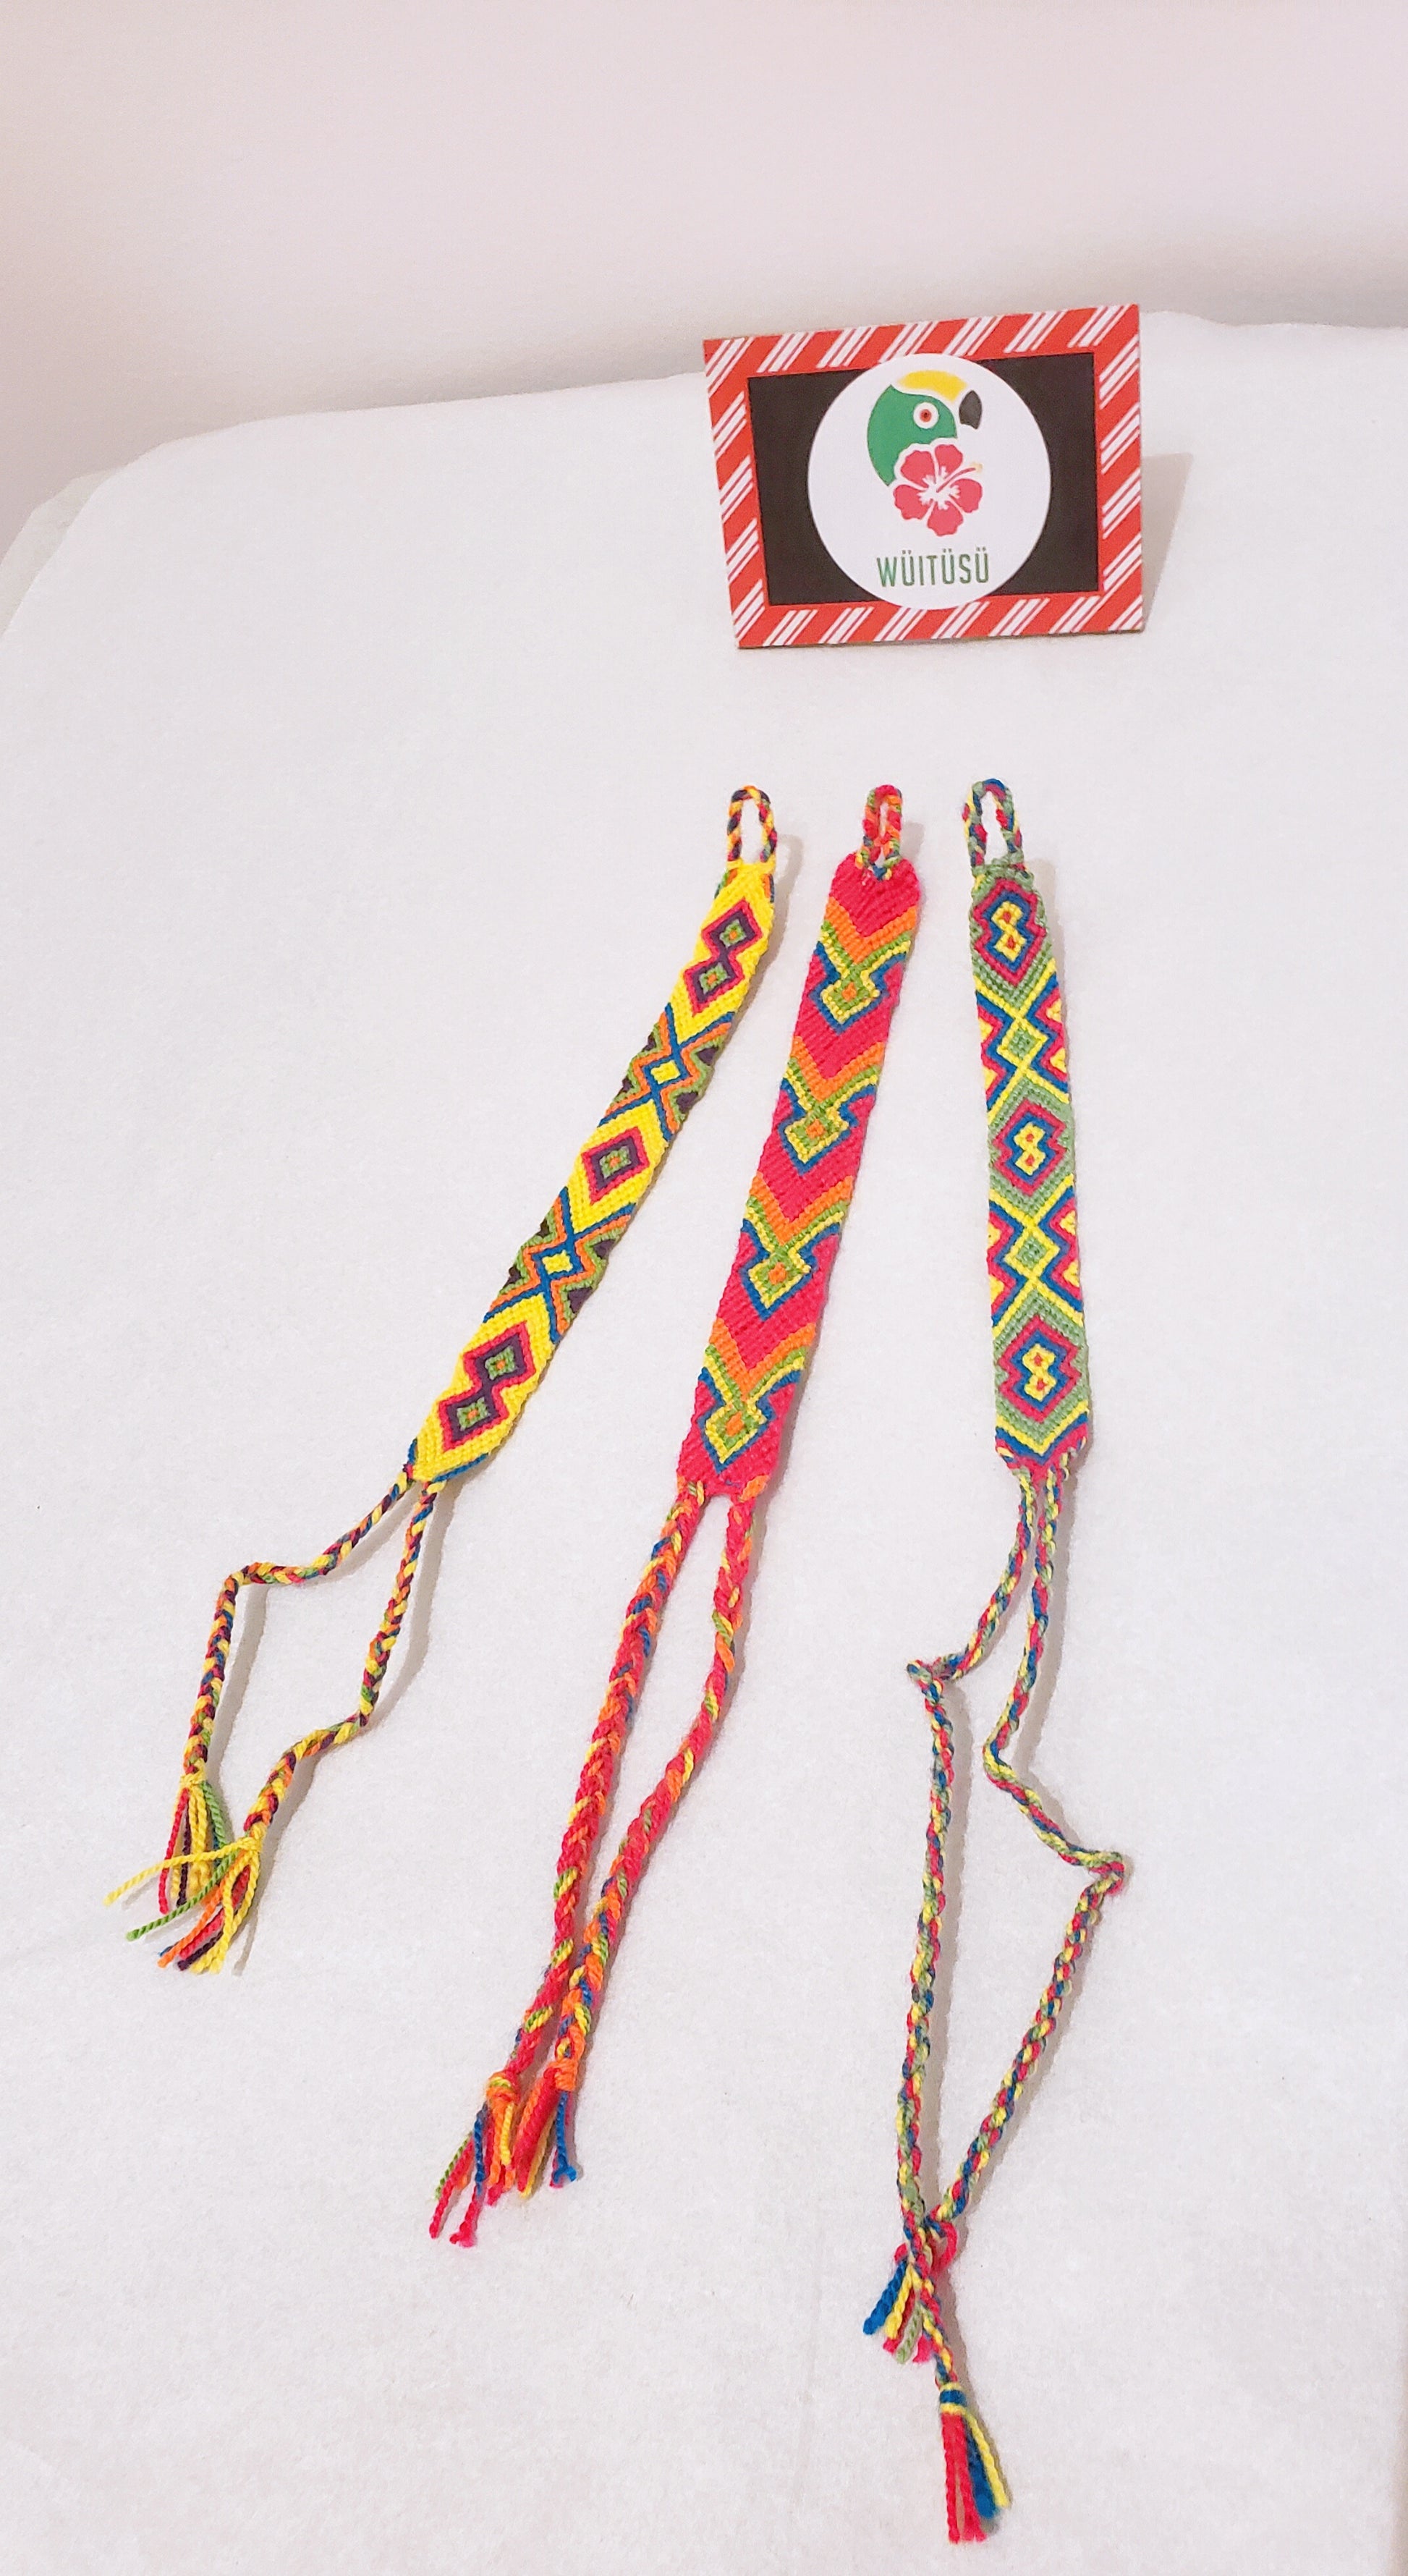 3 Pack of Three Neon Wayuu Handmade Bracelets - Wuitusu